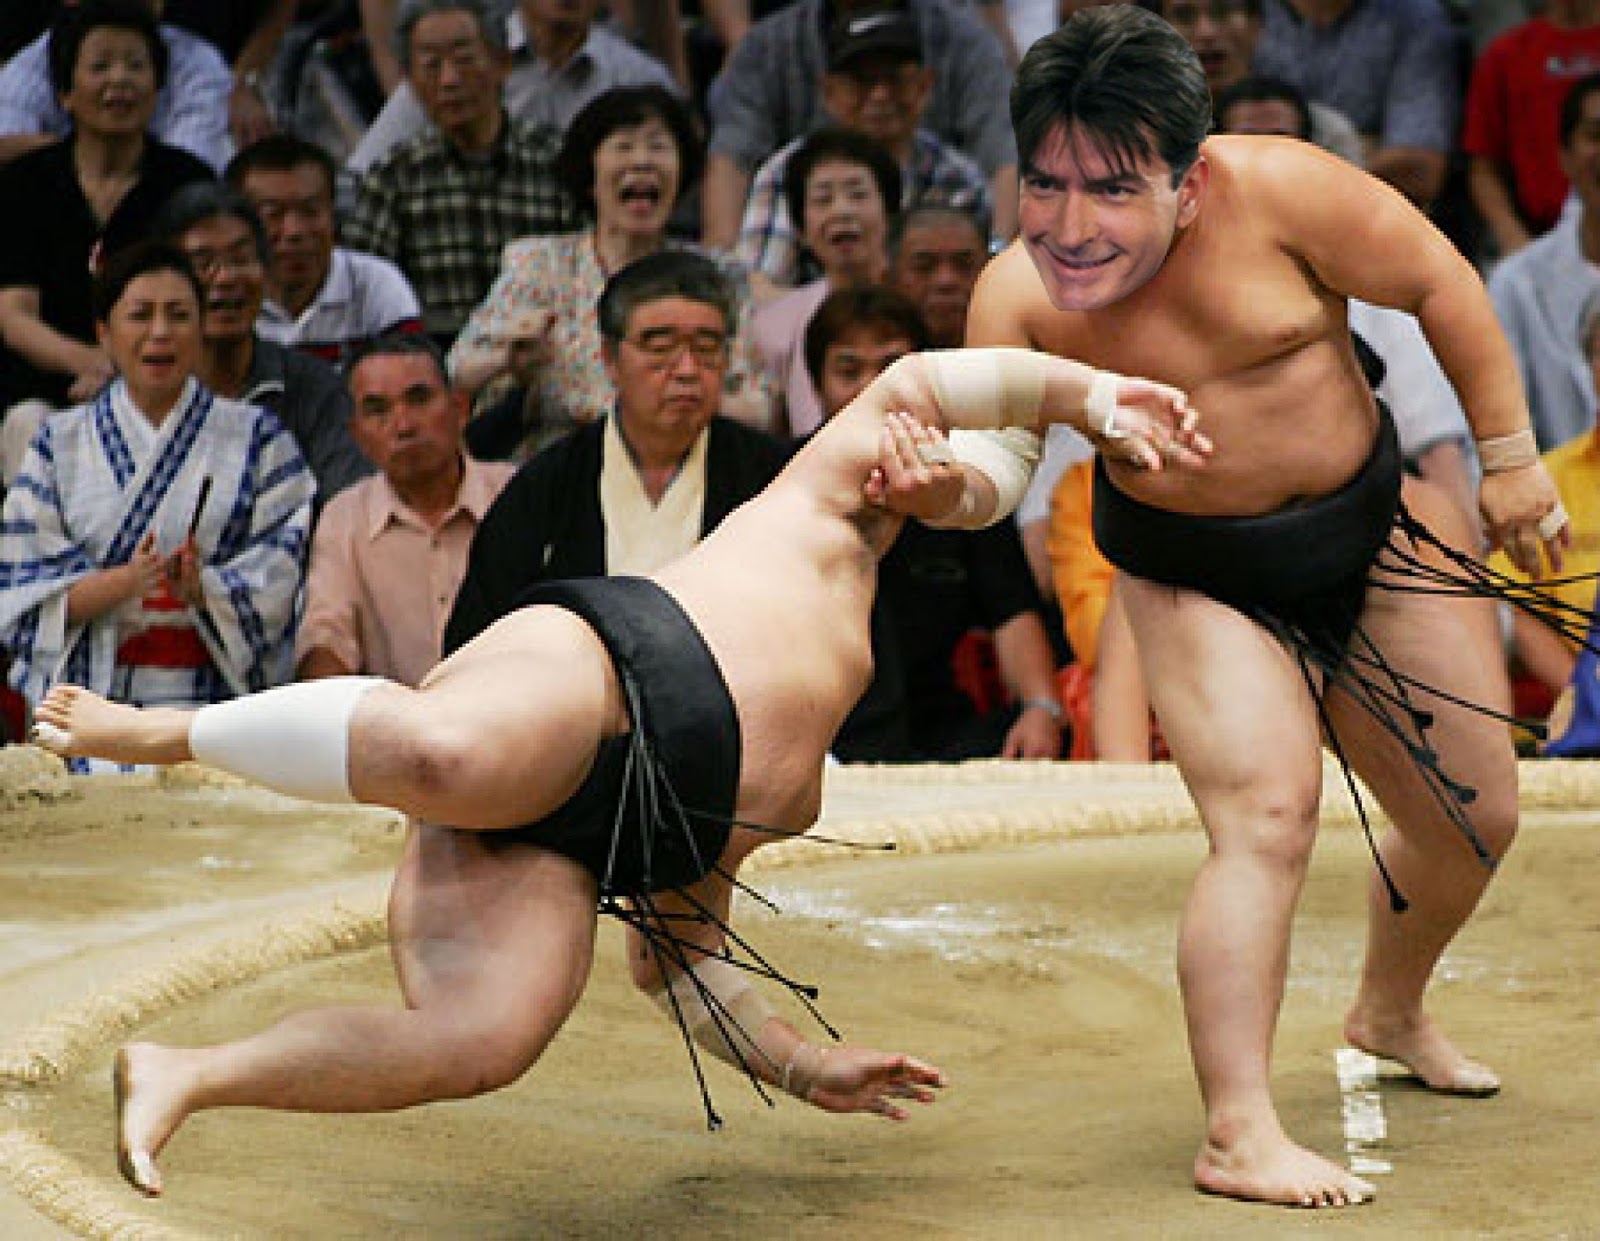 Jacked sumo wrestler